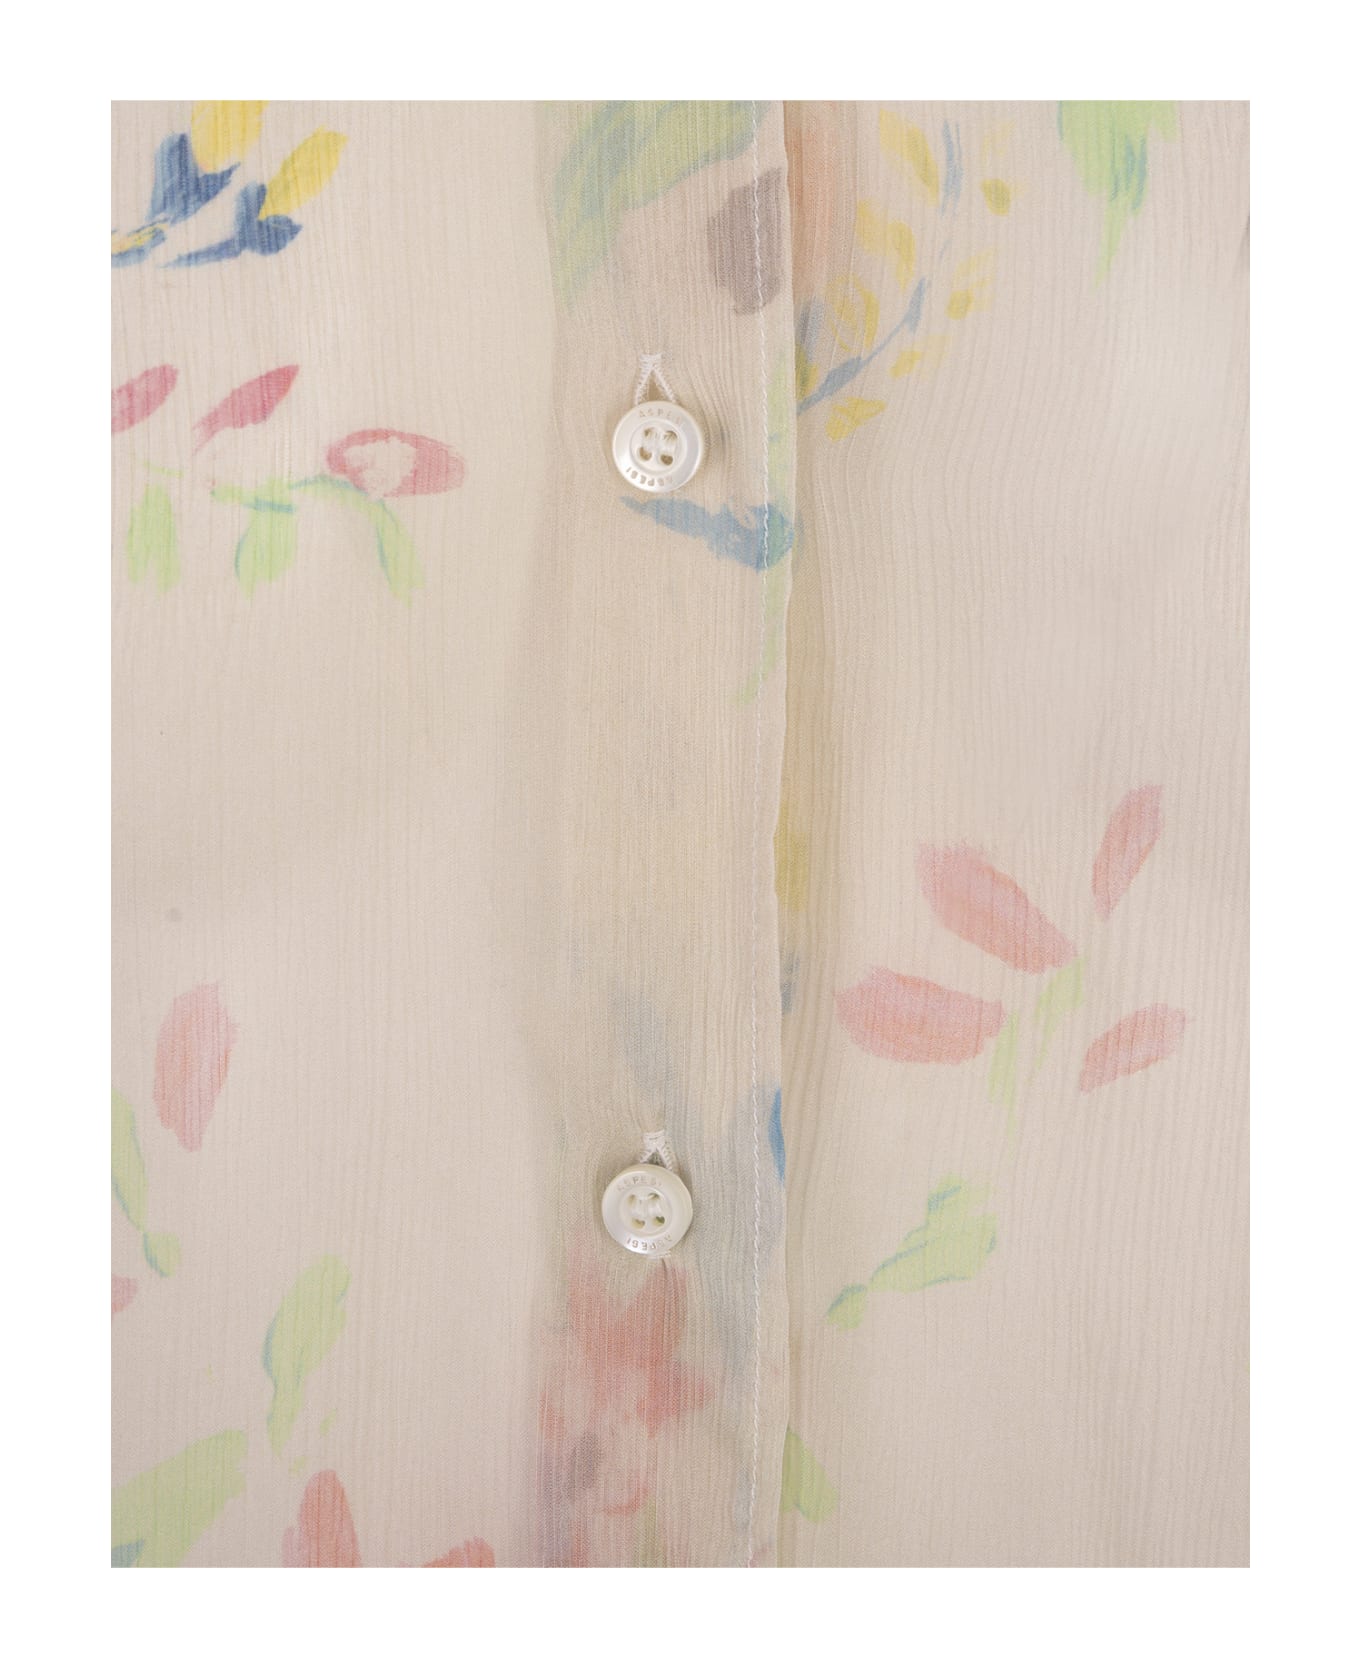 Aspesi Flower Silk Shirt - Multicolour ブラウス